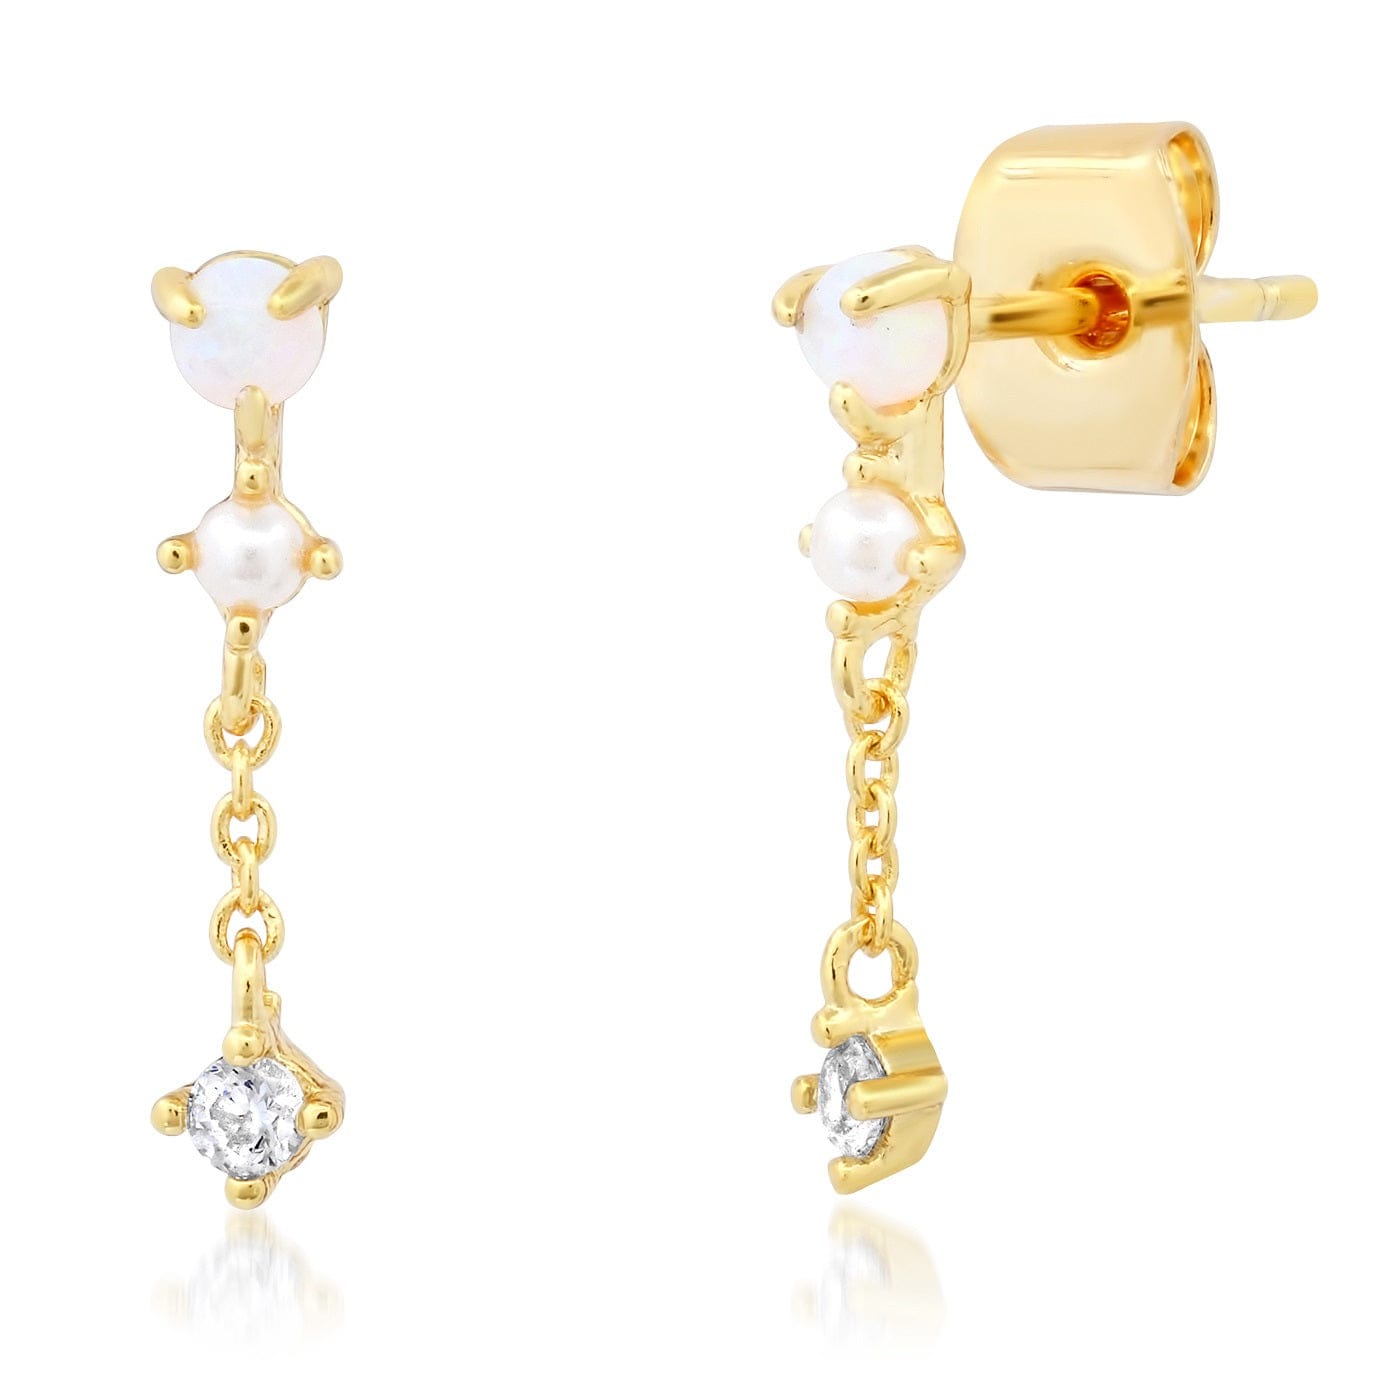 TAI JEWELRY Earrings Opal Studs with CZ Chain Dangle